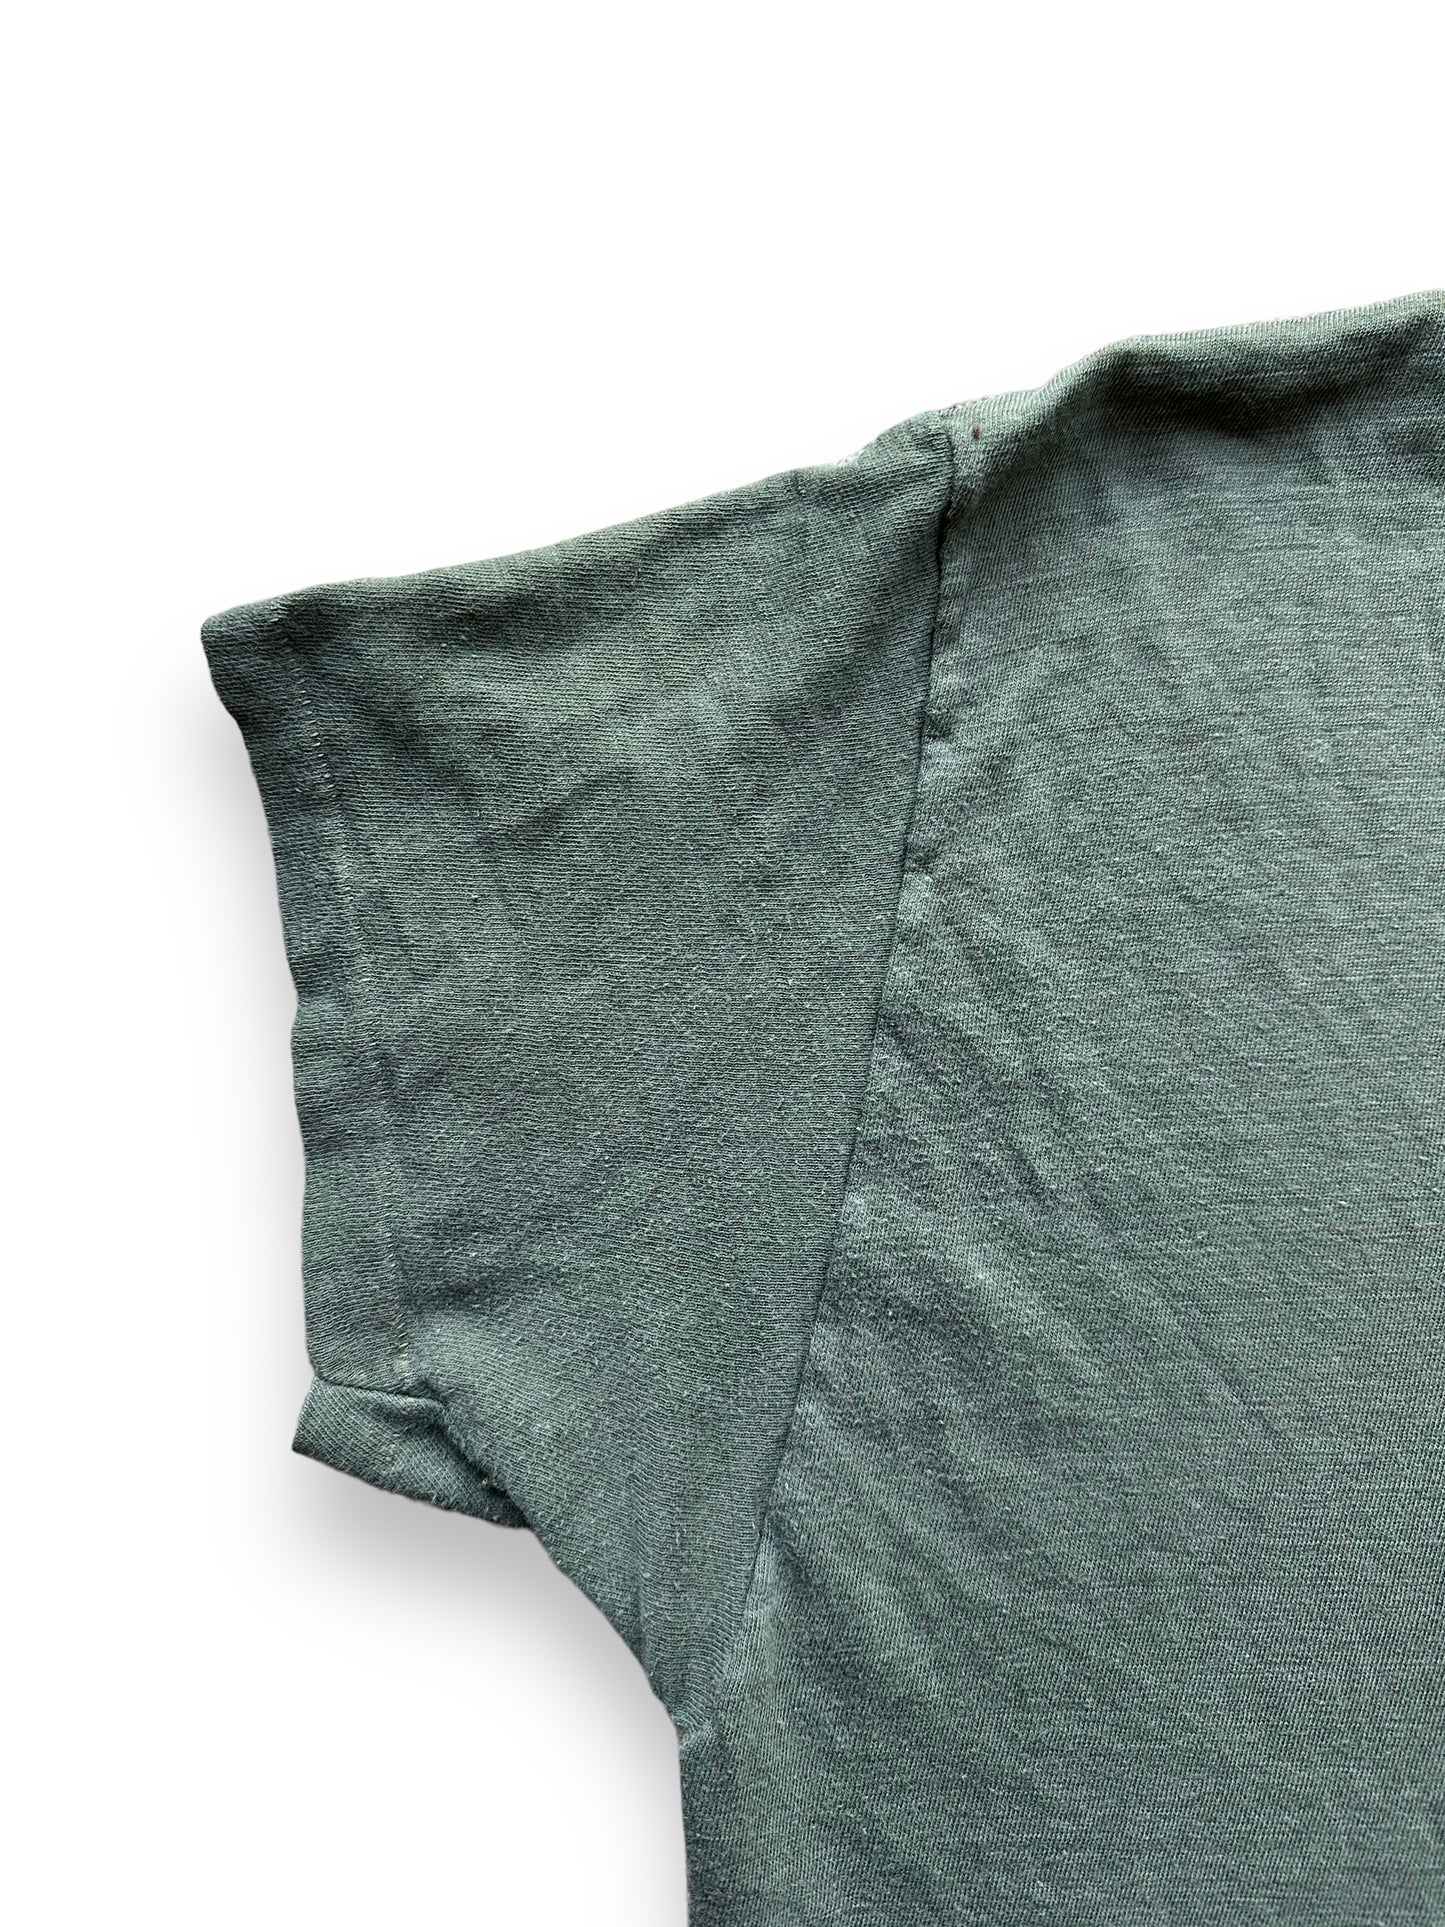 Right Sleeve of Vintage Green Hanes Blank Tee SZ XL | Vintage Blank T-Shirts Seattle | Barn Owl Vintage Tees Seattle